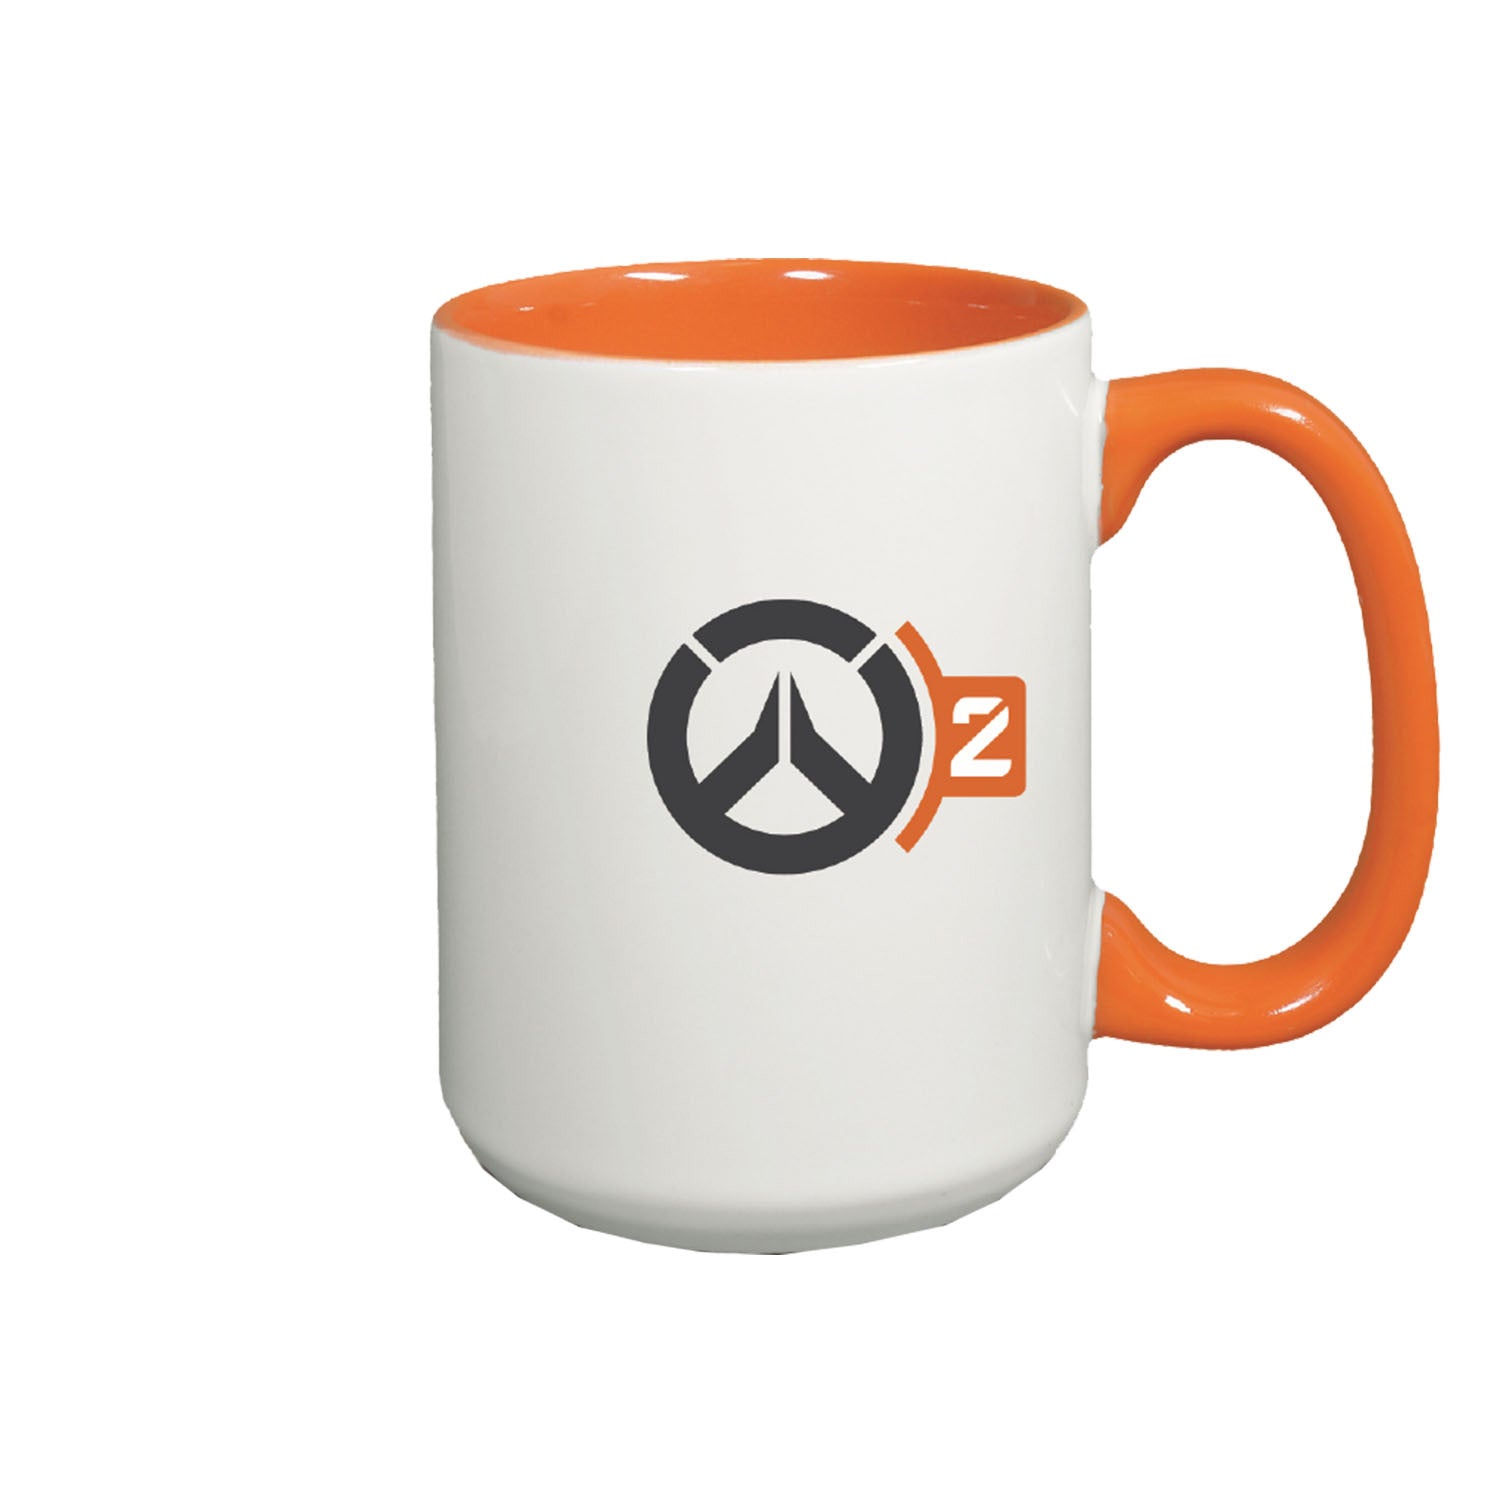 Overwatch 2 15oz Ceramic Mug in White - Right View